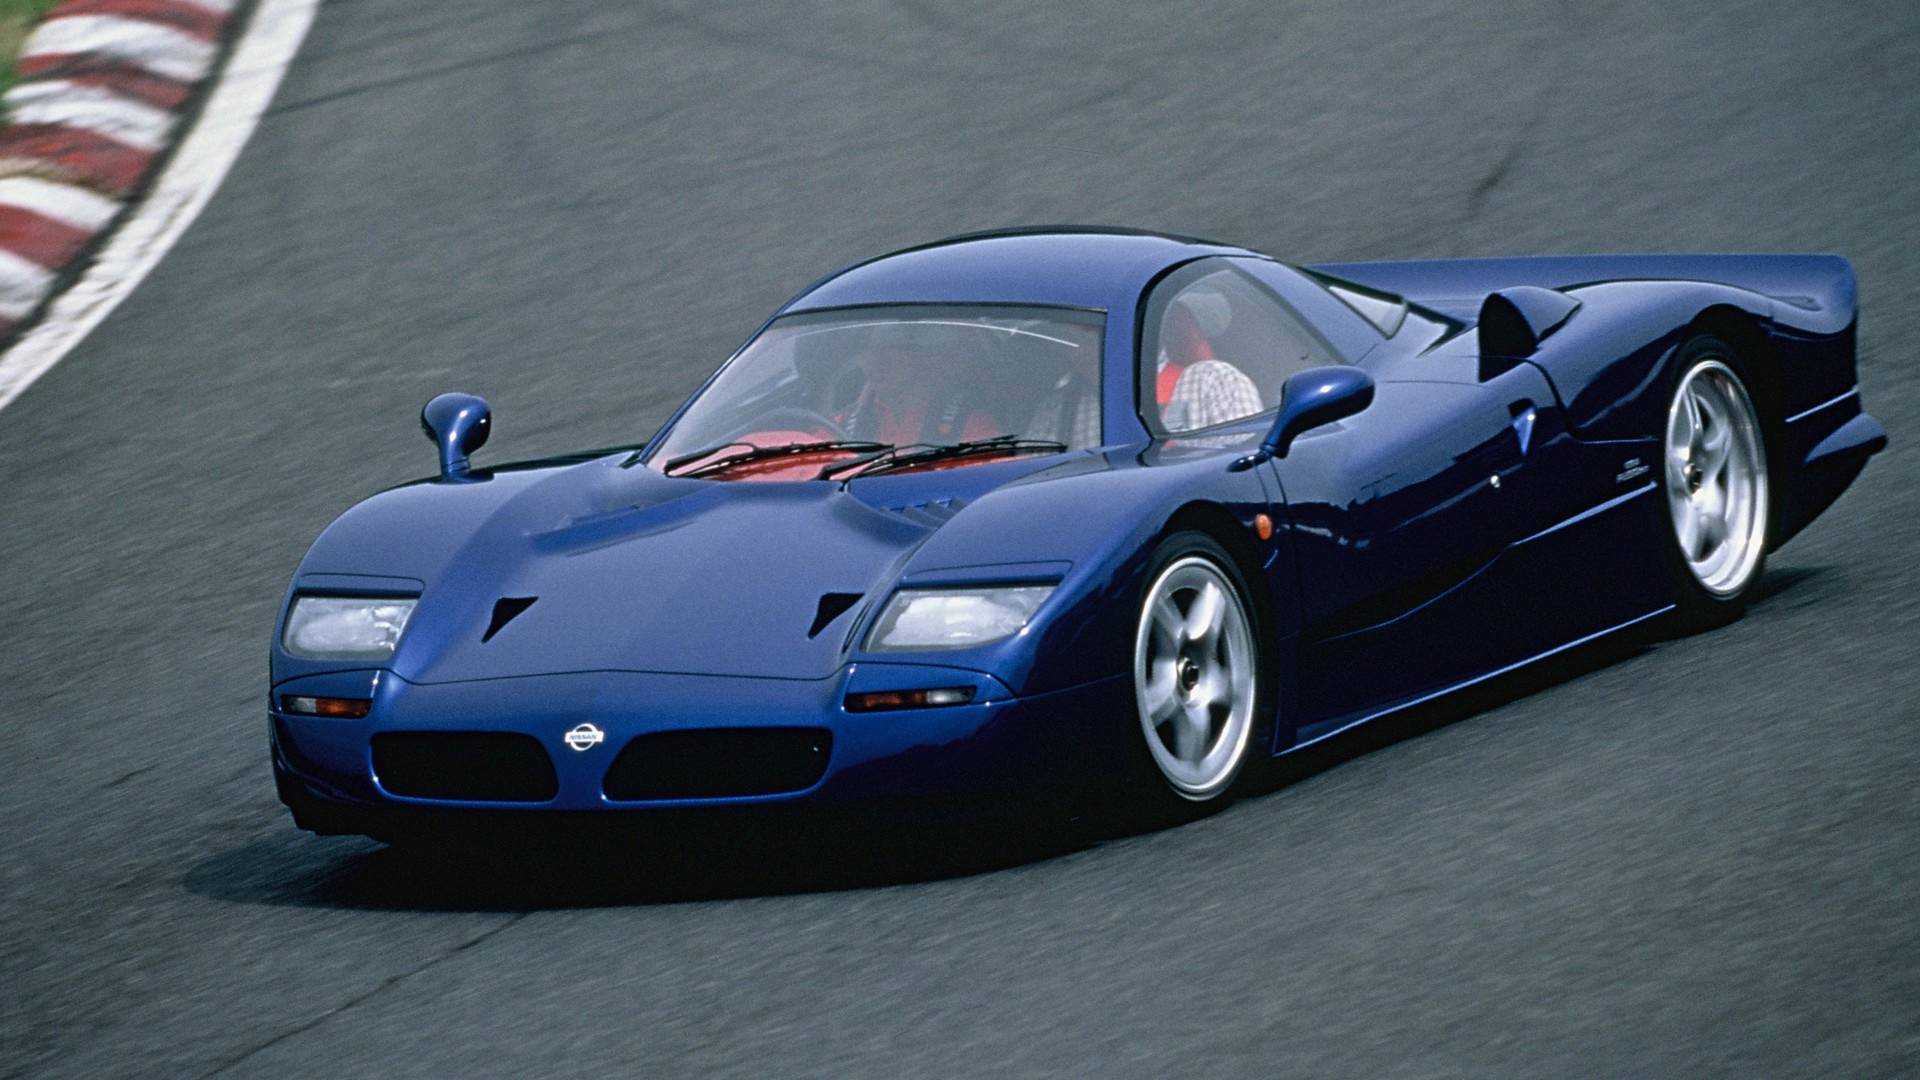 1998 Nissan R390 GT1